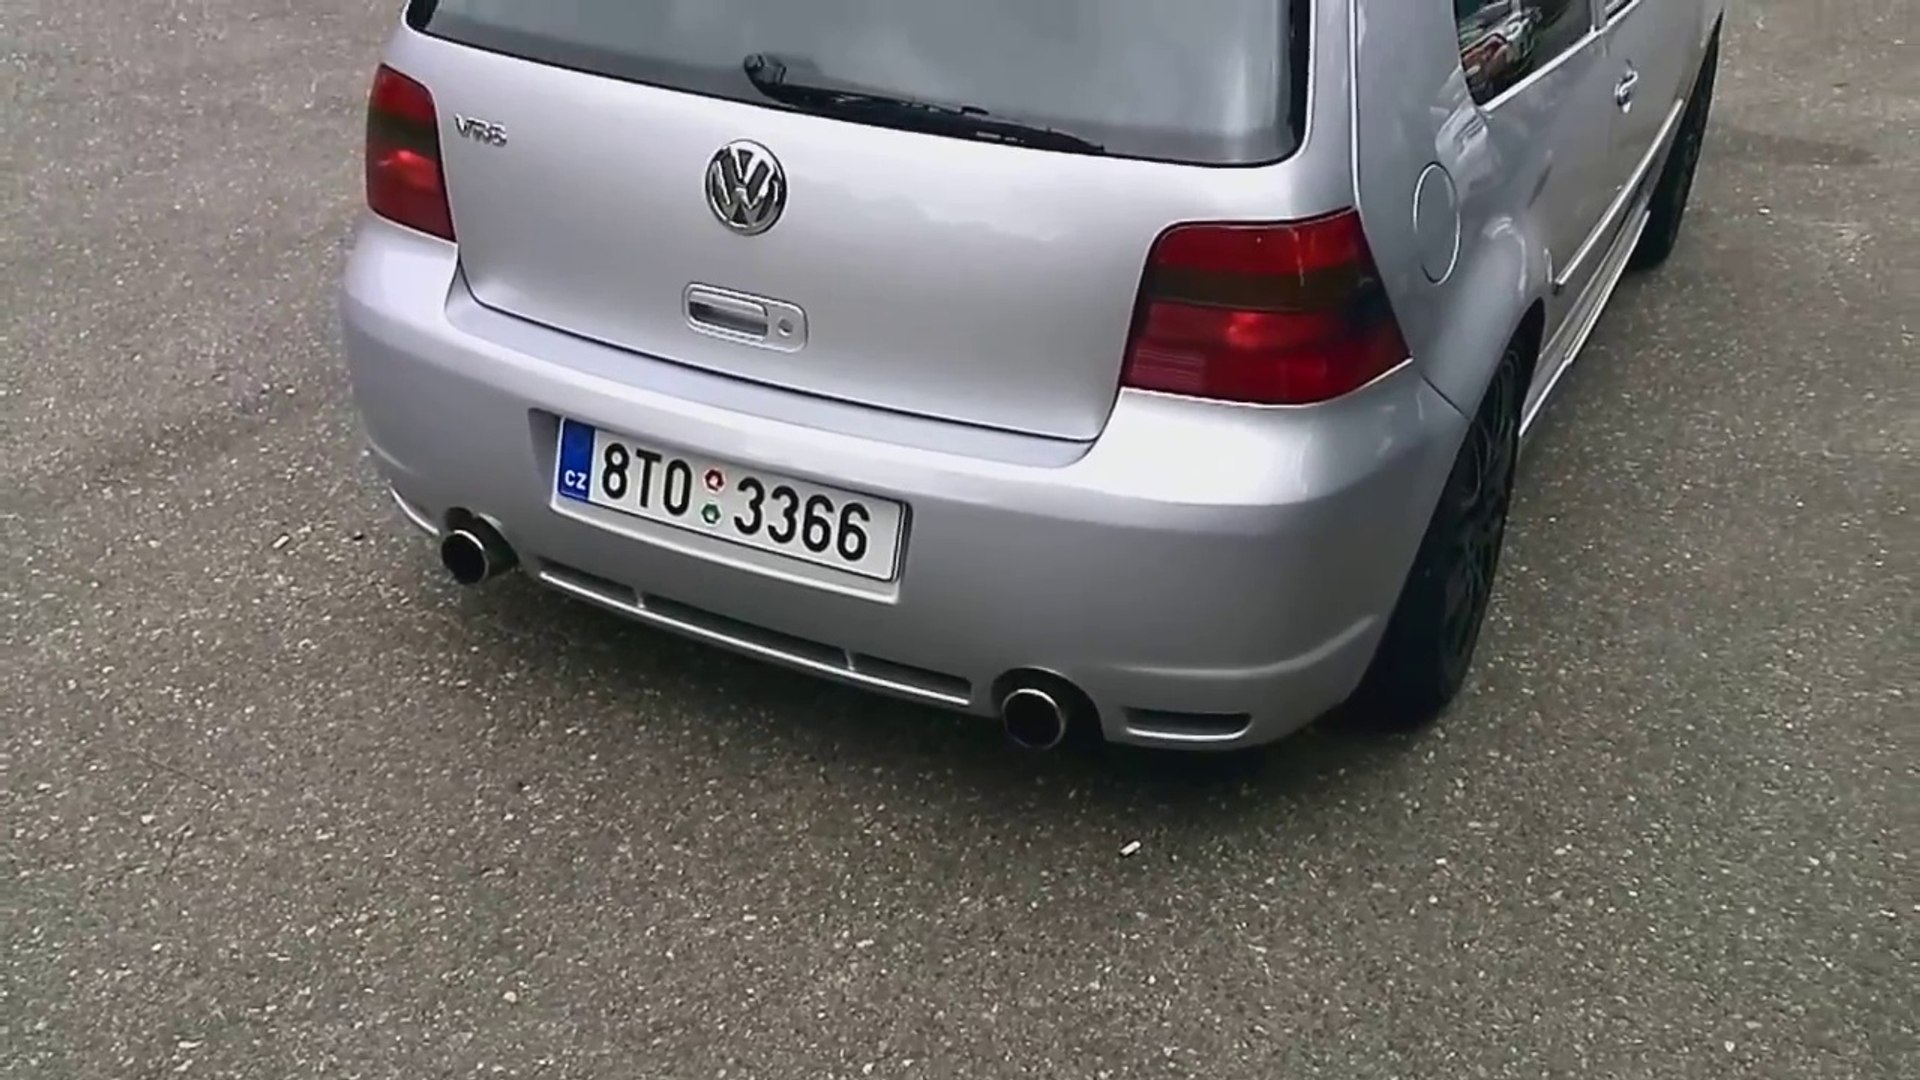 VW GOLF 4 2.8 VR6 - video Dailymotion